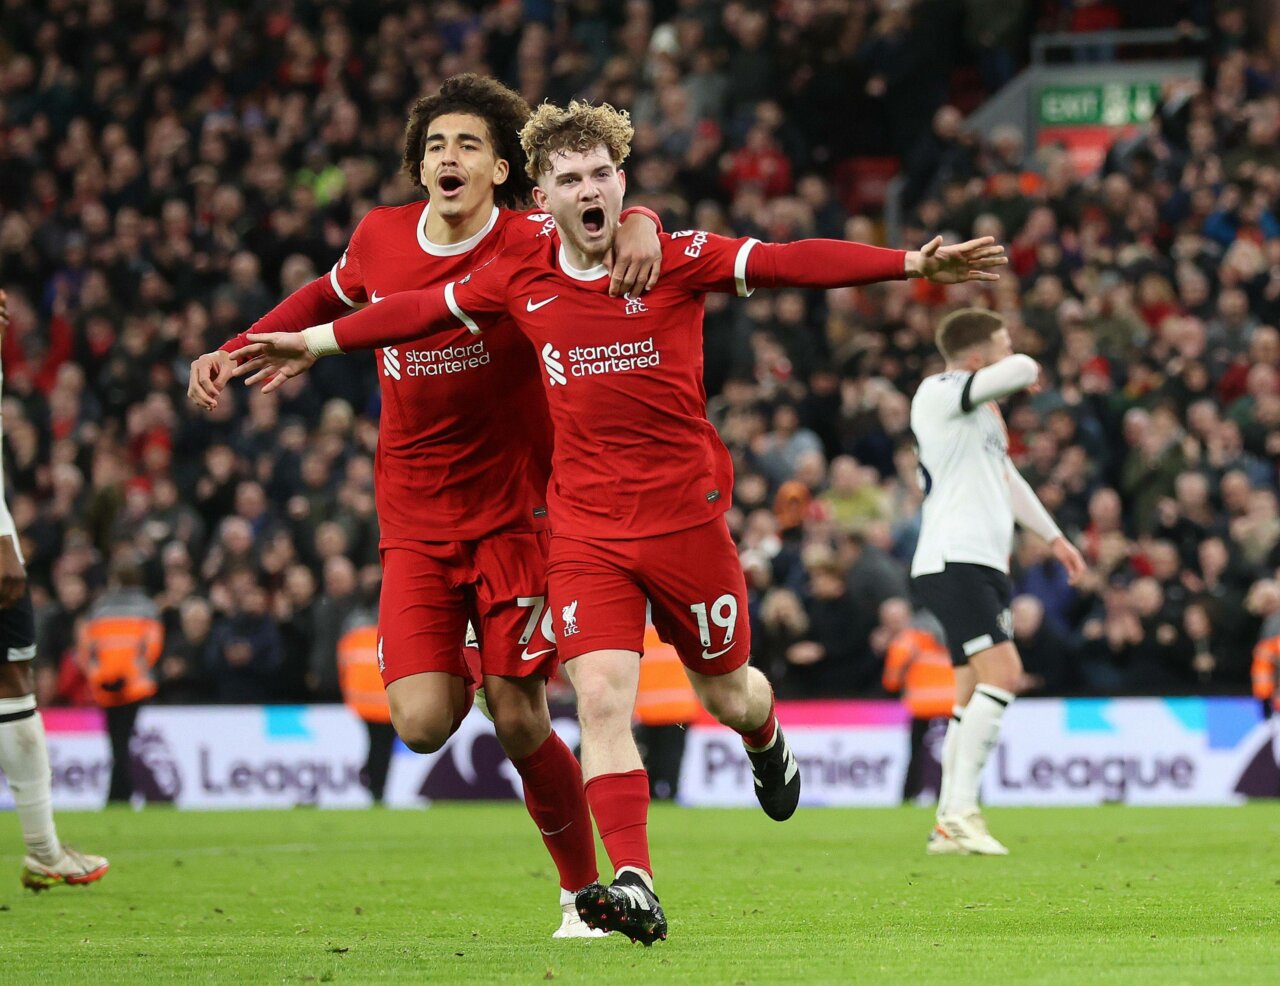 Liverpool's Dominant Comeback 4-1 Win Over Luton Town